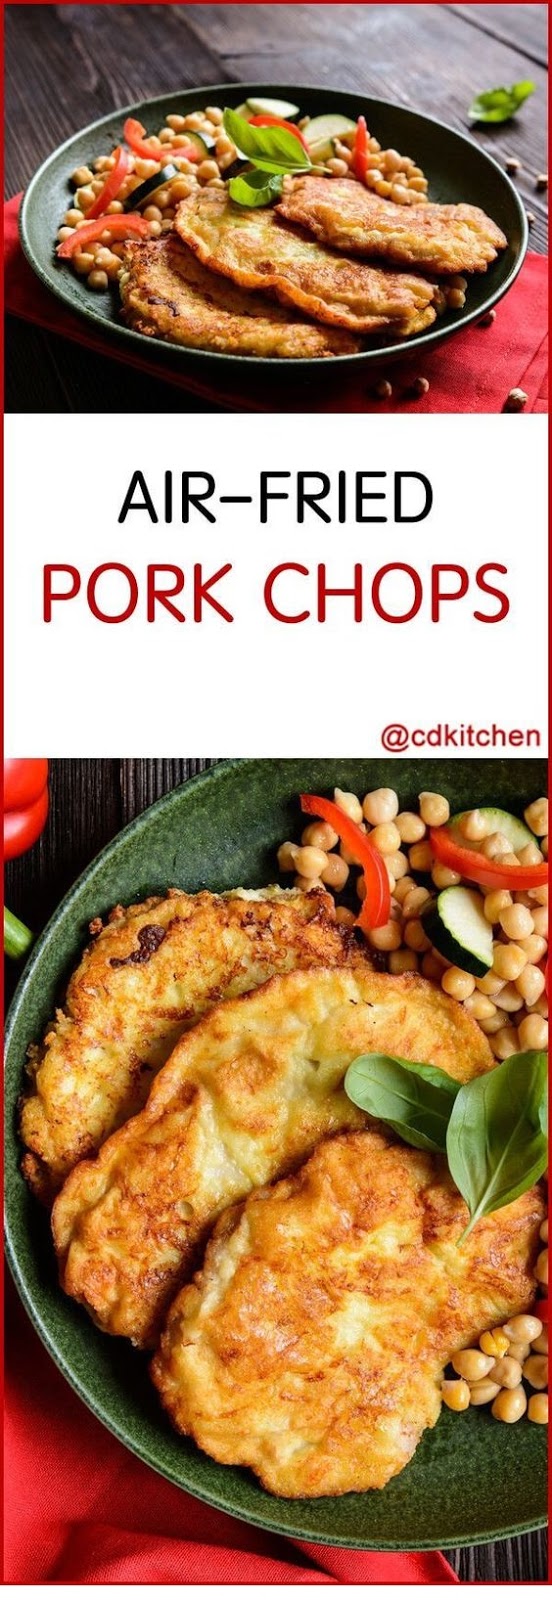 Air-Fried Pork Chops